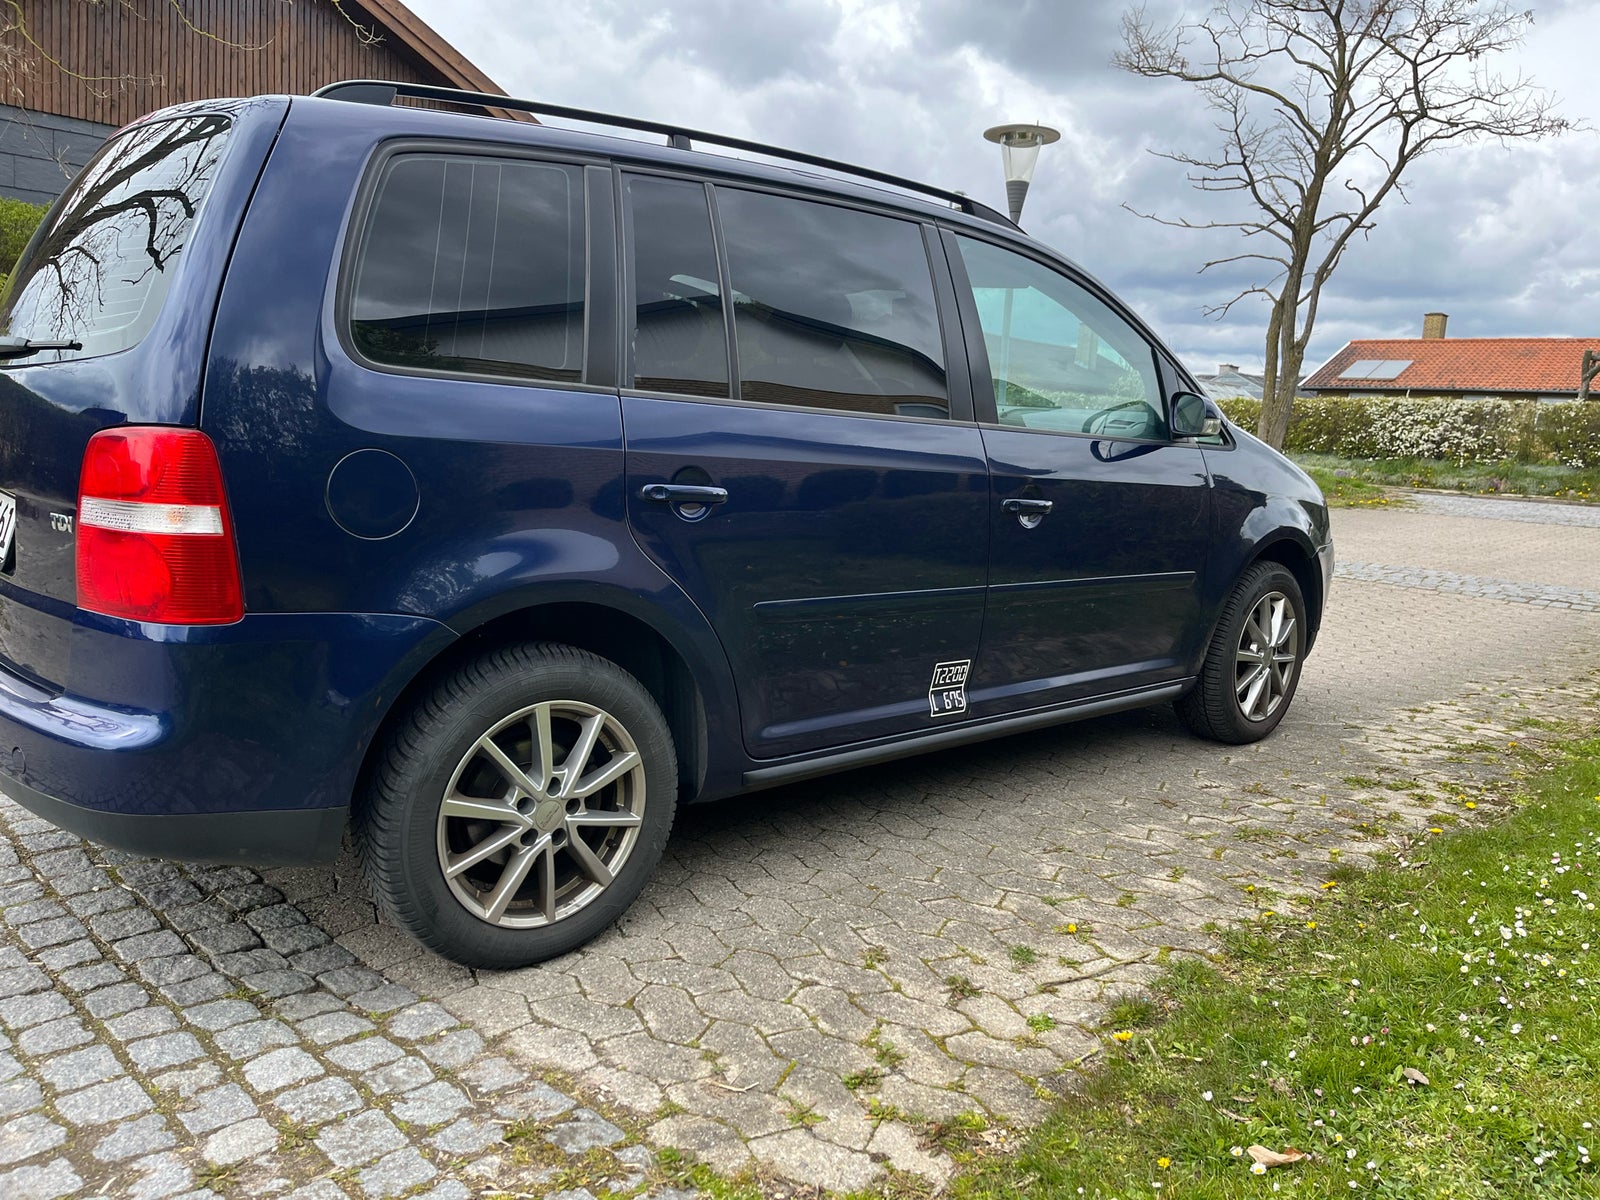 VW, Touran, 1,9 TDi 100 Trendline Van